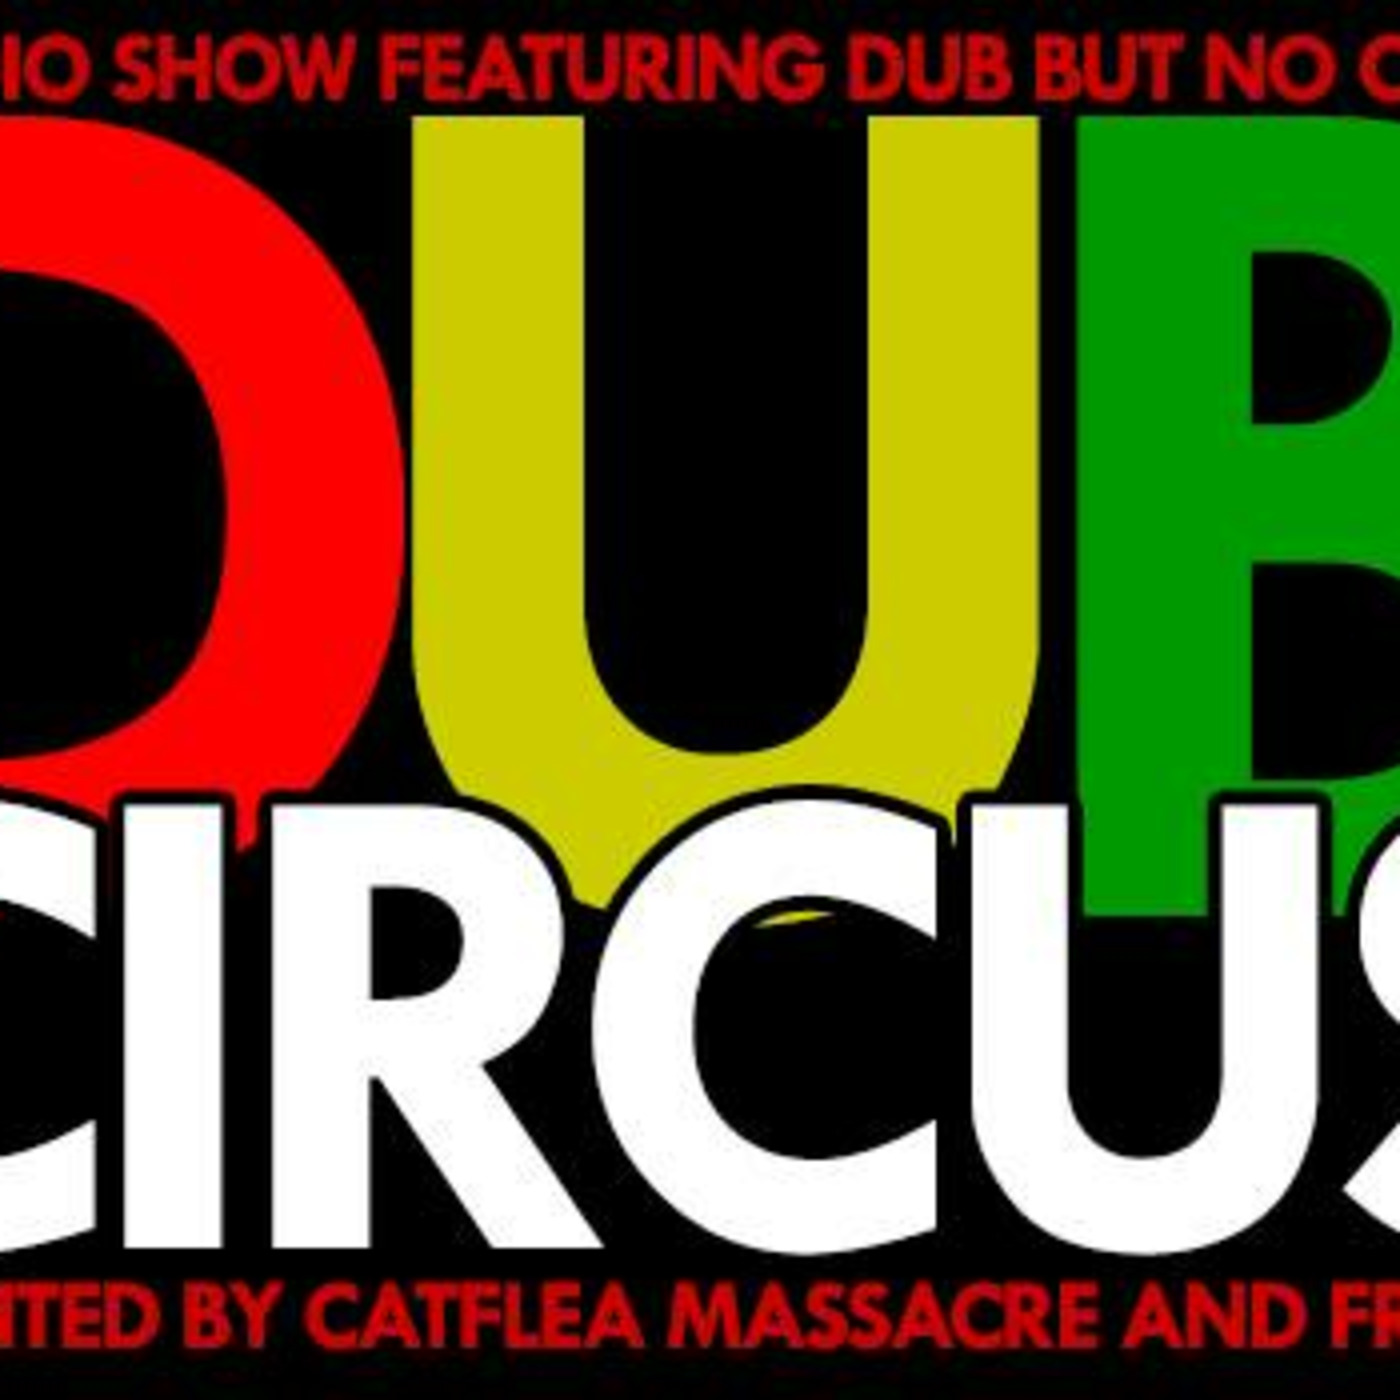 Episode 3573: Dub Circus Show 243 On bootboyradio.net